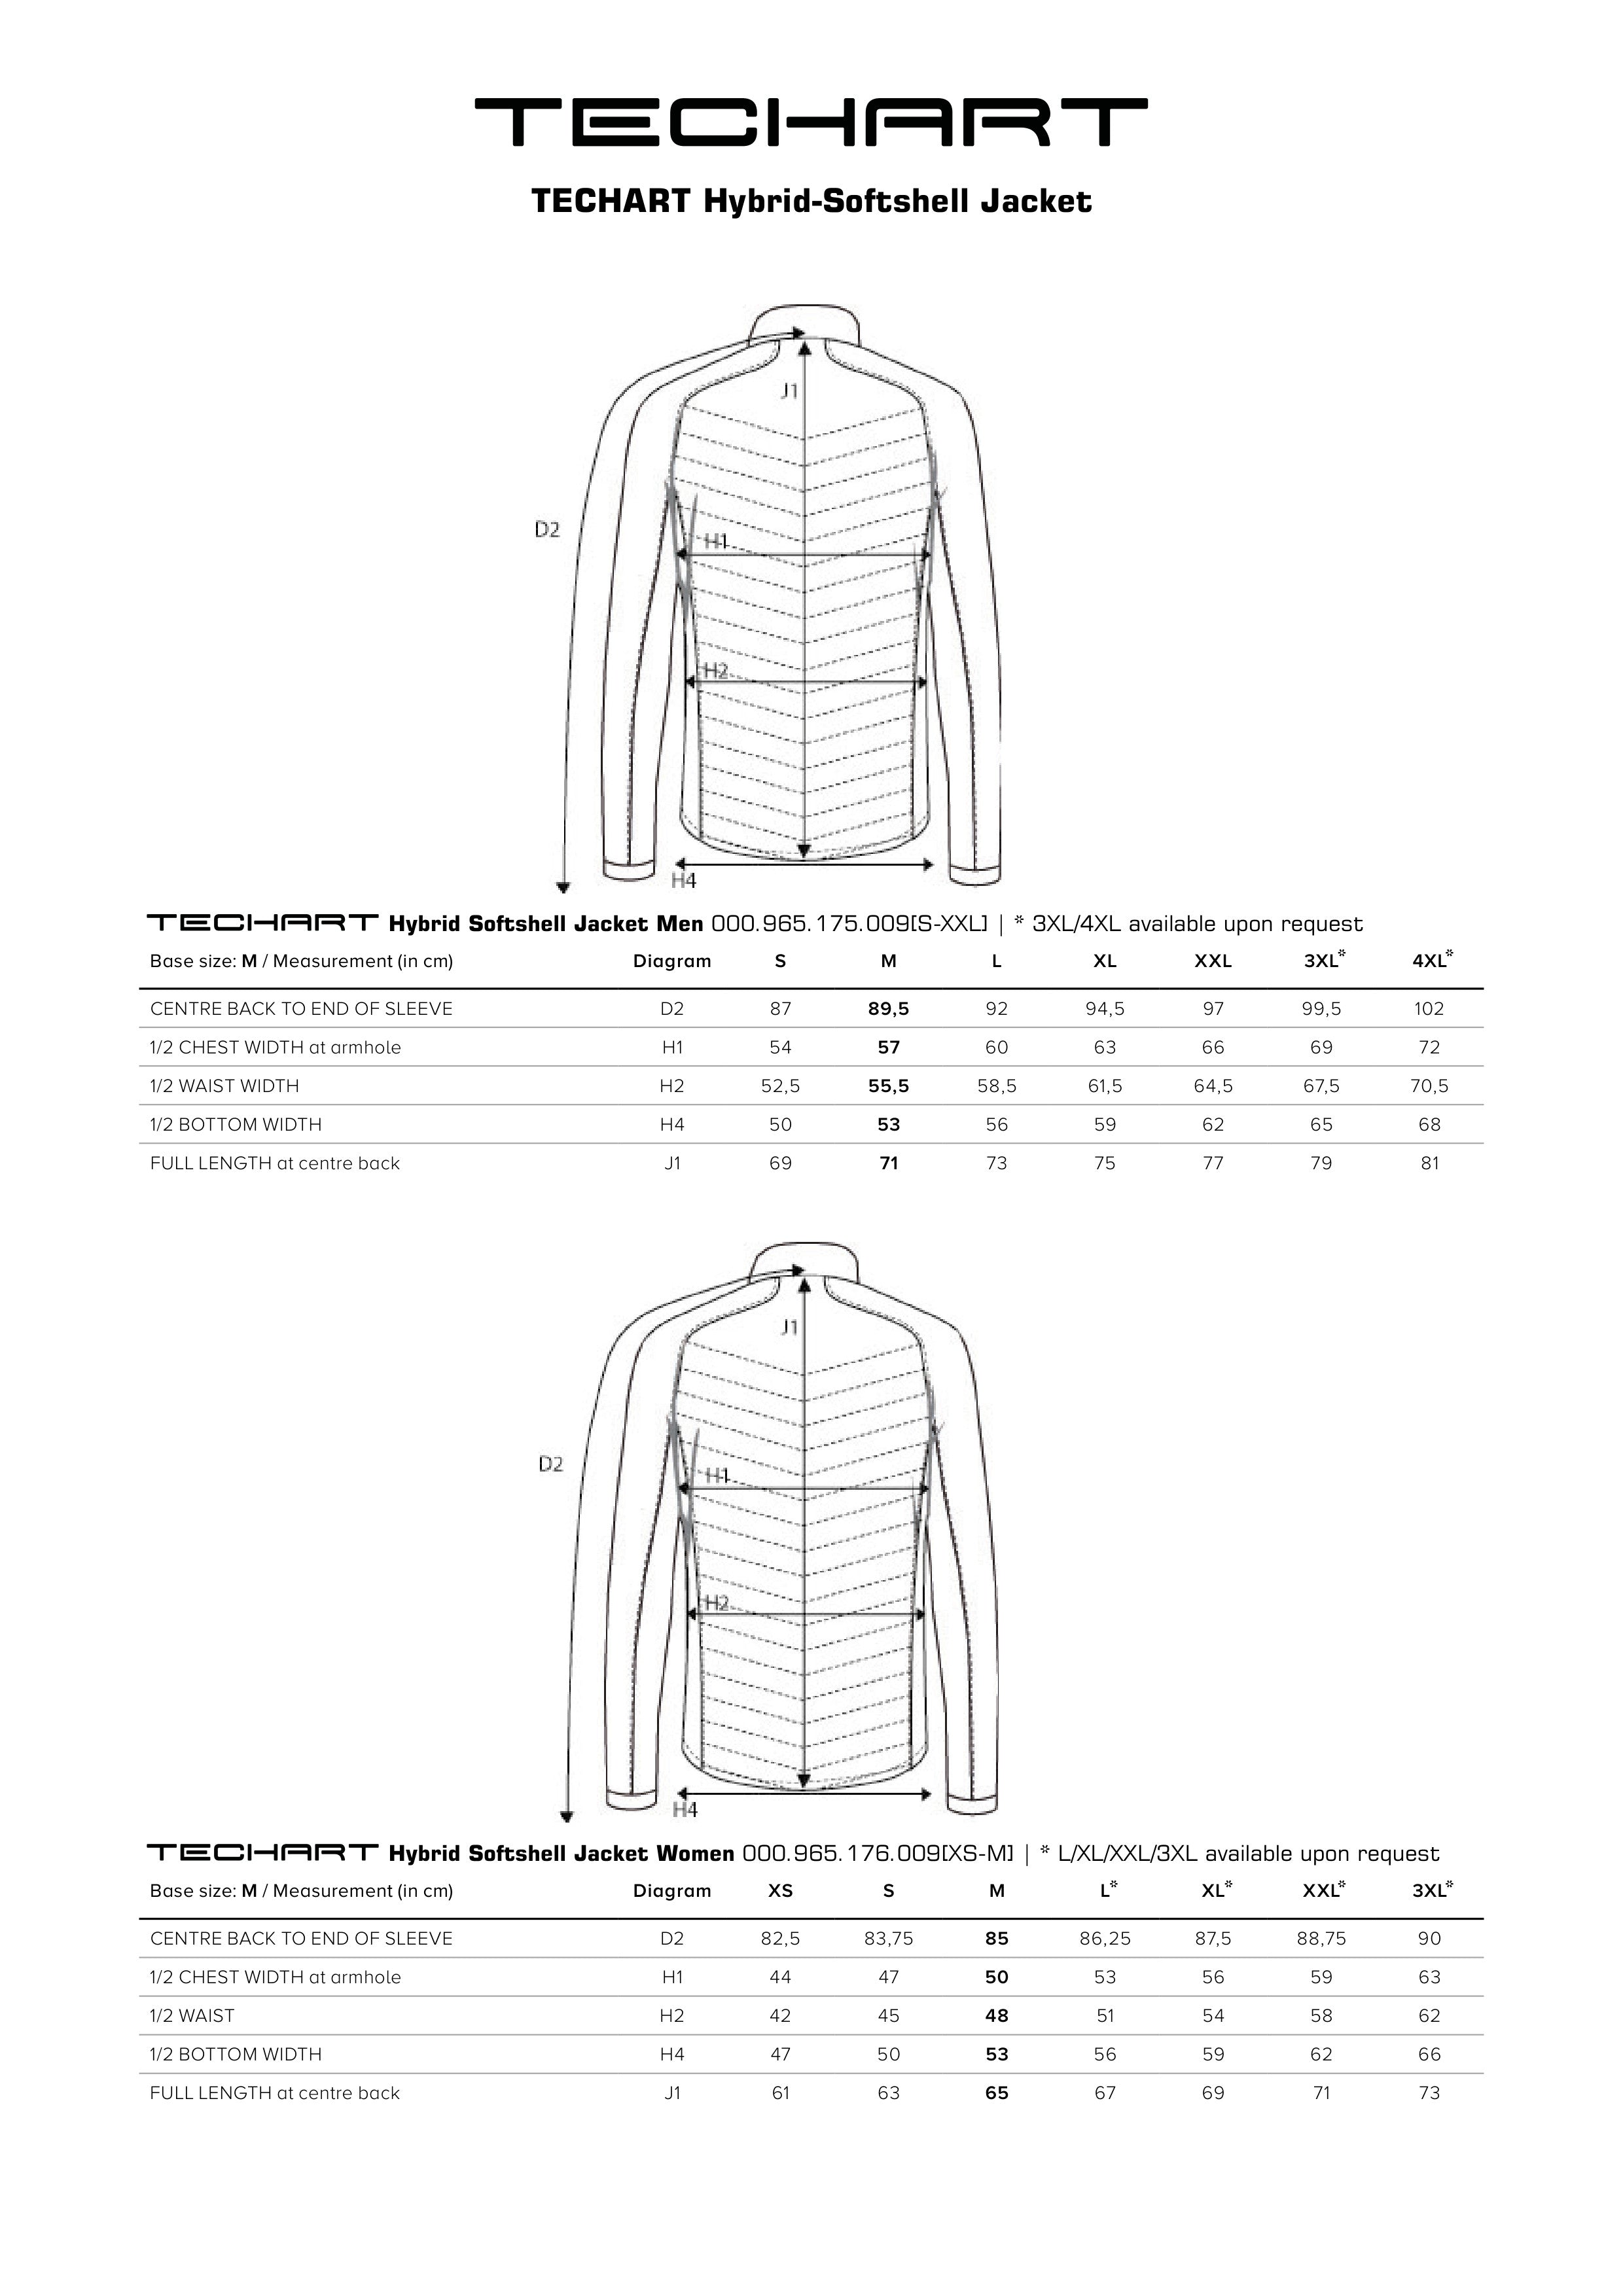 TECHART Hybrid-Softshell Jacket Men/Women – Techart US Warehouse